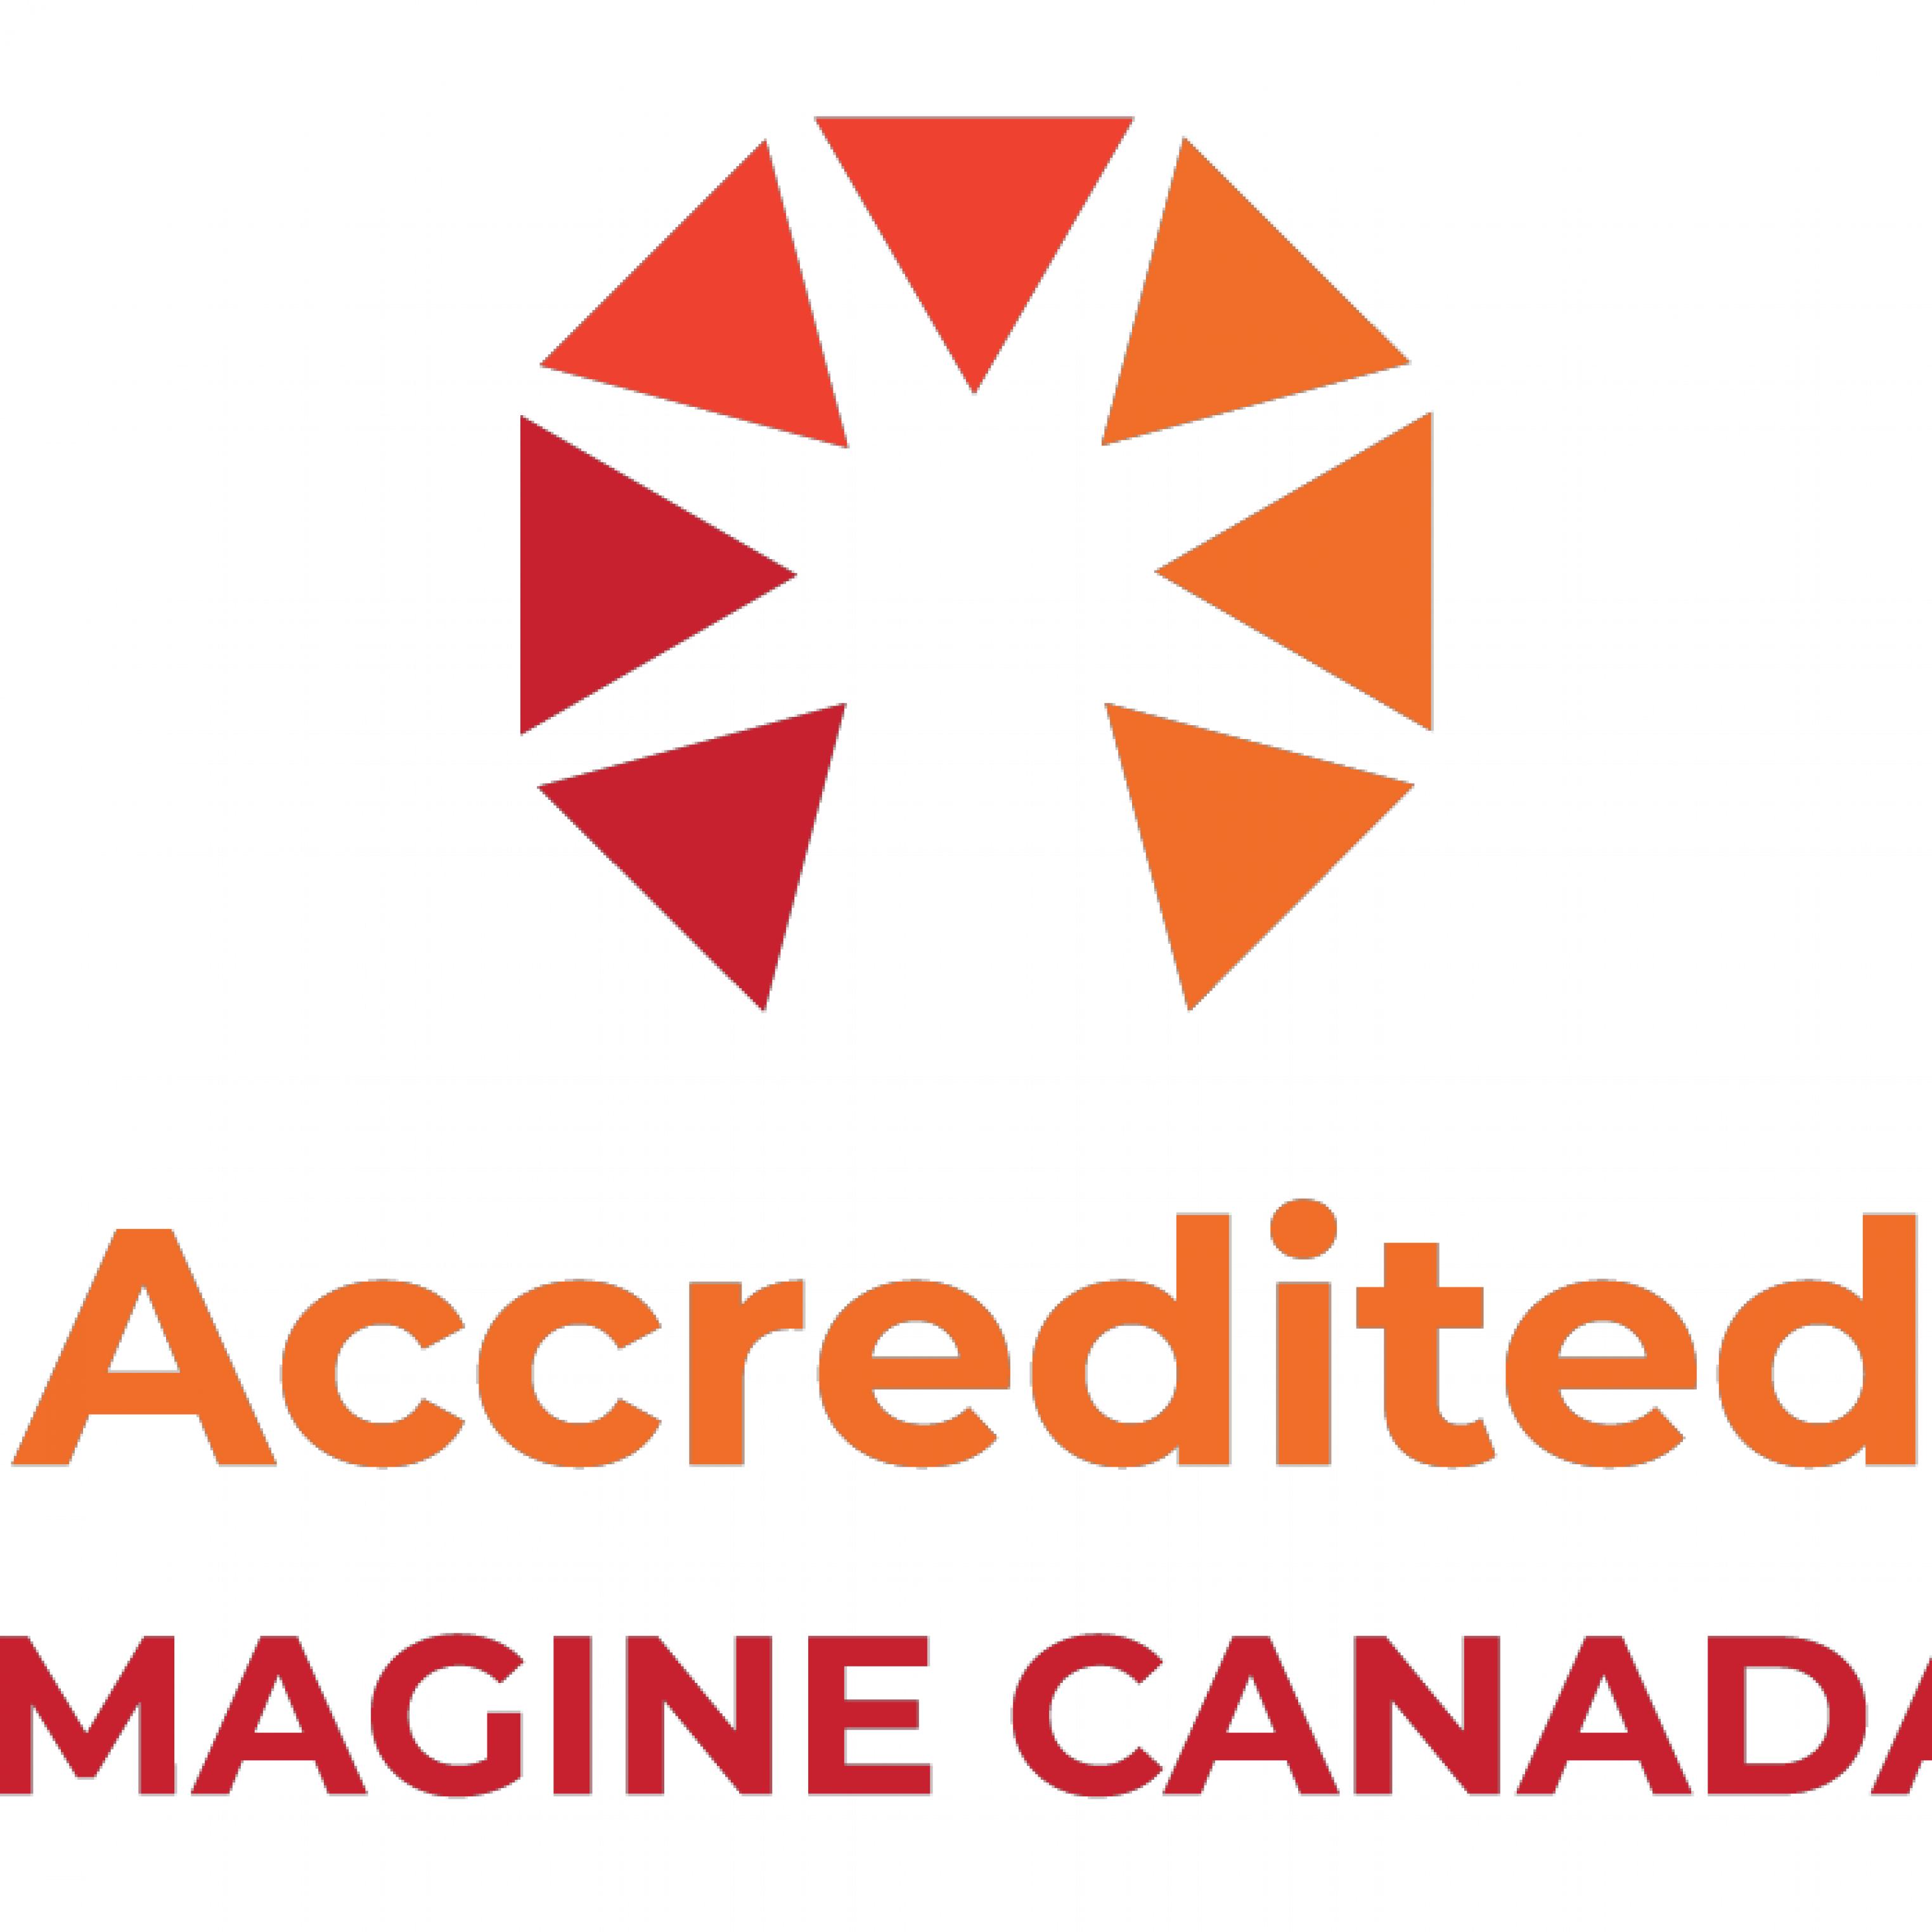 IC-accredited imagine canada